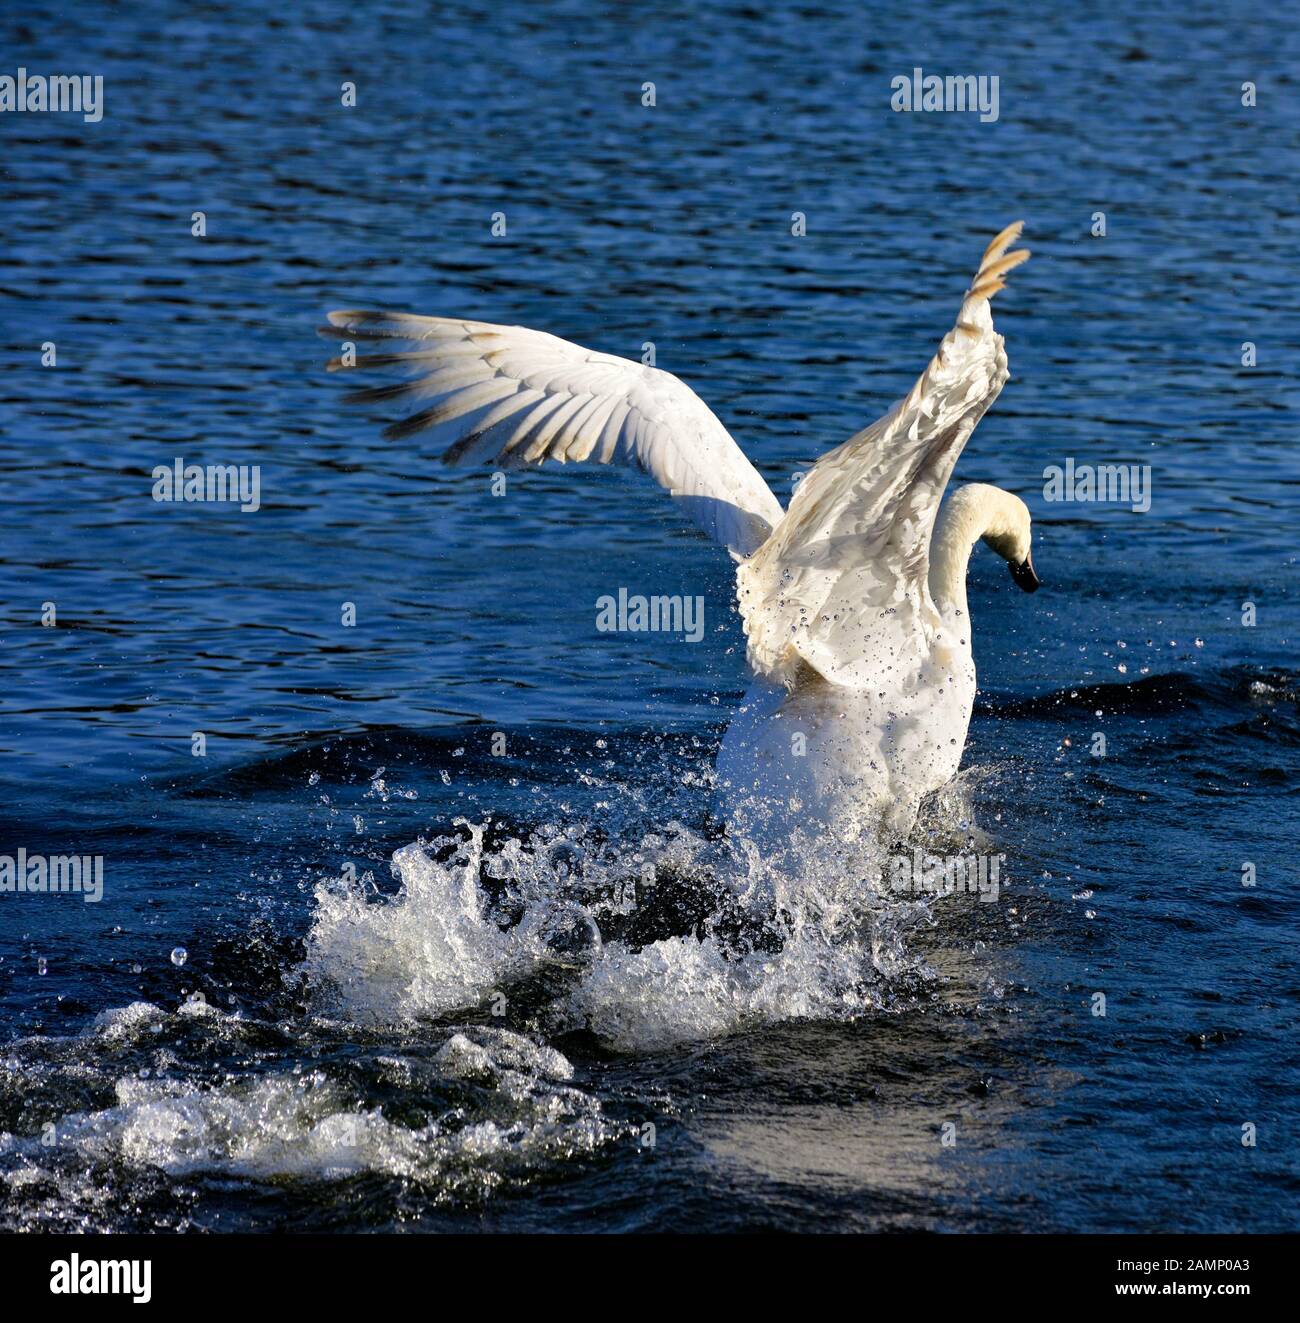 Mute swans chasing across the water showing aggression,Swans bridge, west hallam,Ilkeston,Nottingham,England,UK Stock Photo